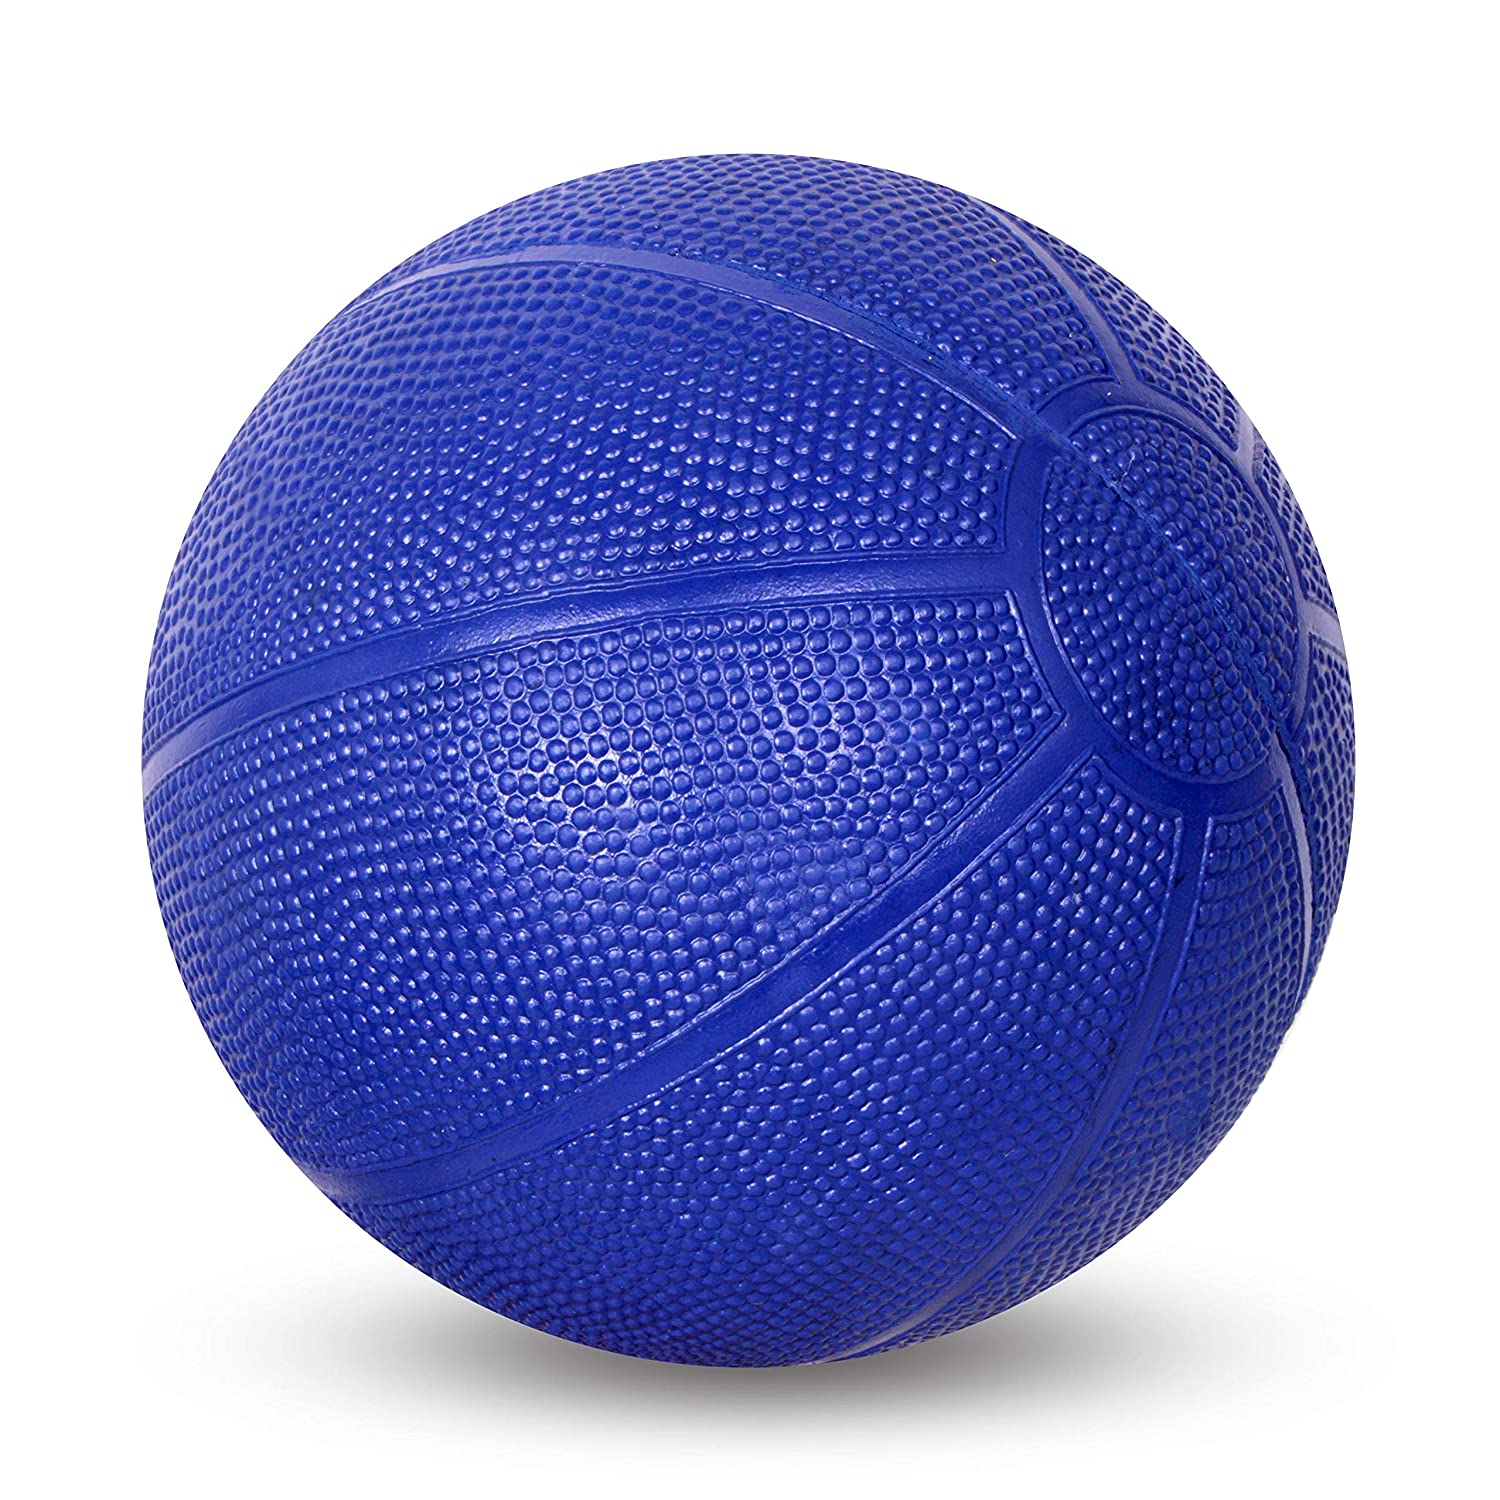 Nivia Medicine Ball, 4kg - Best Price online Prokicksports.com